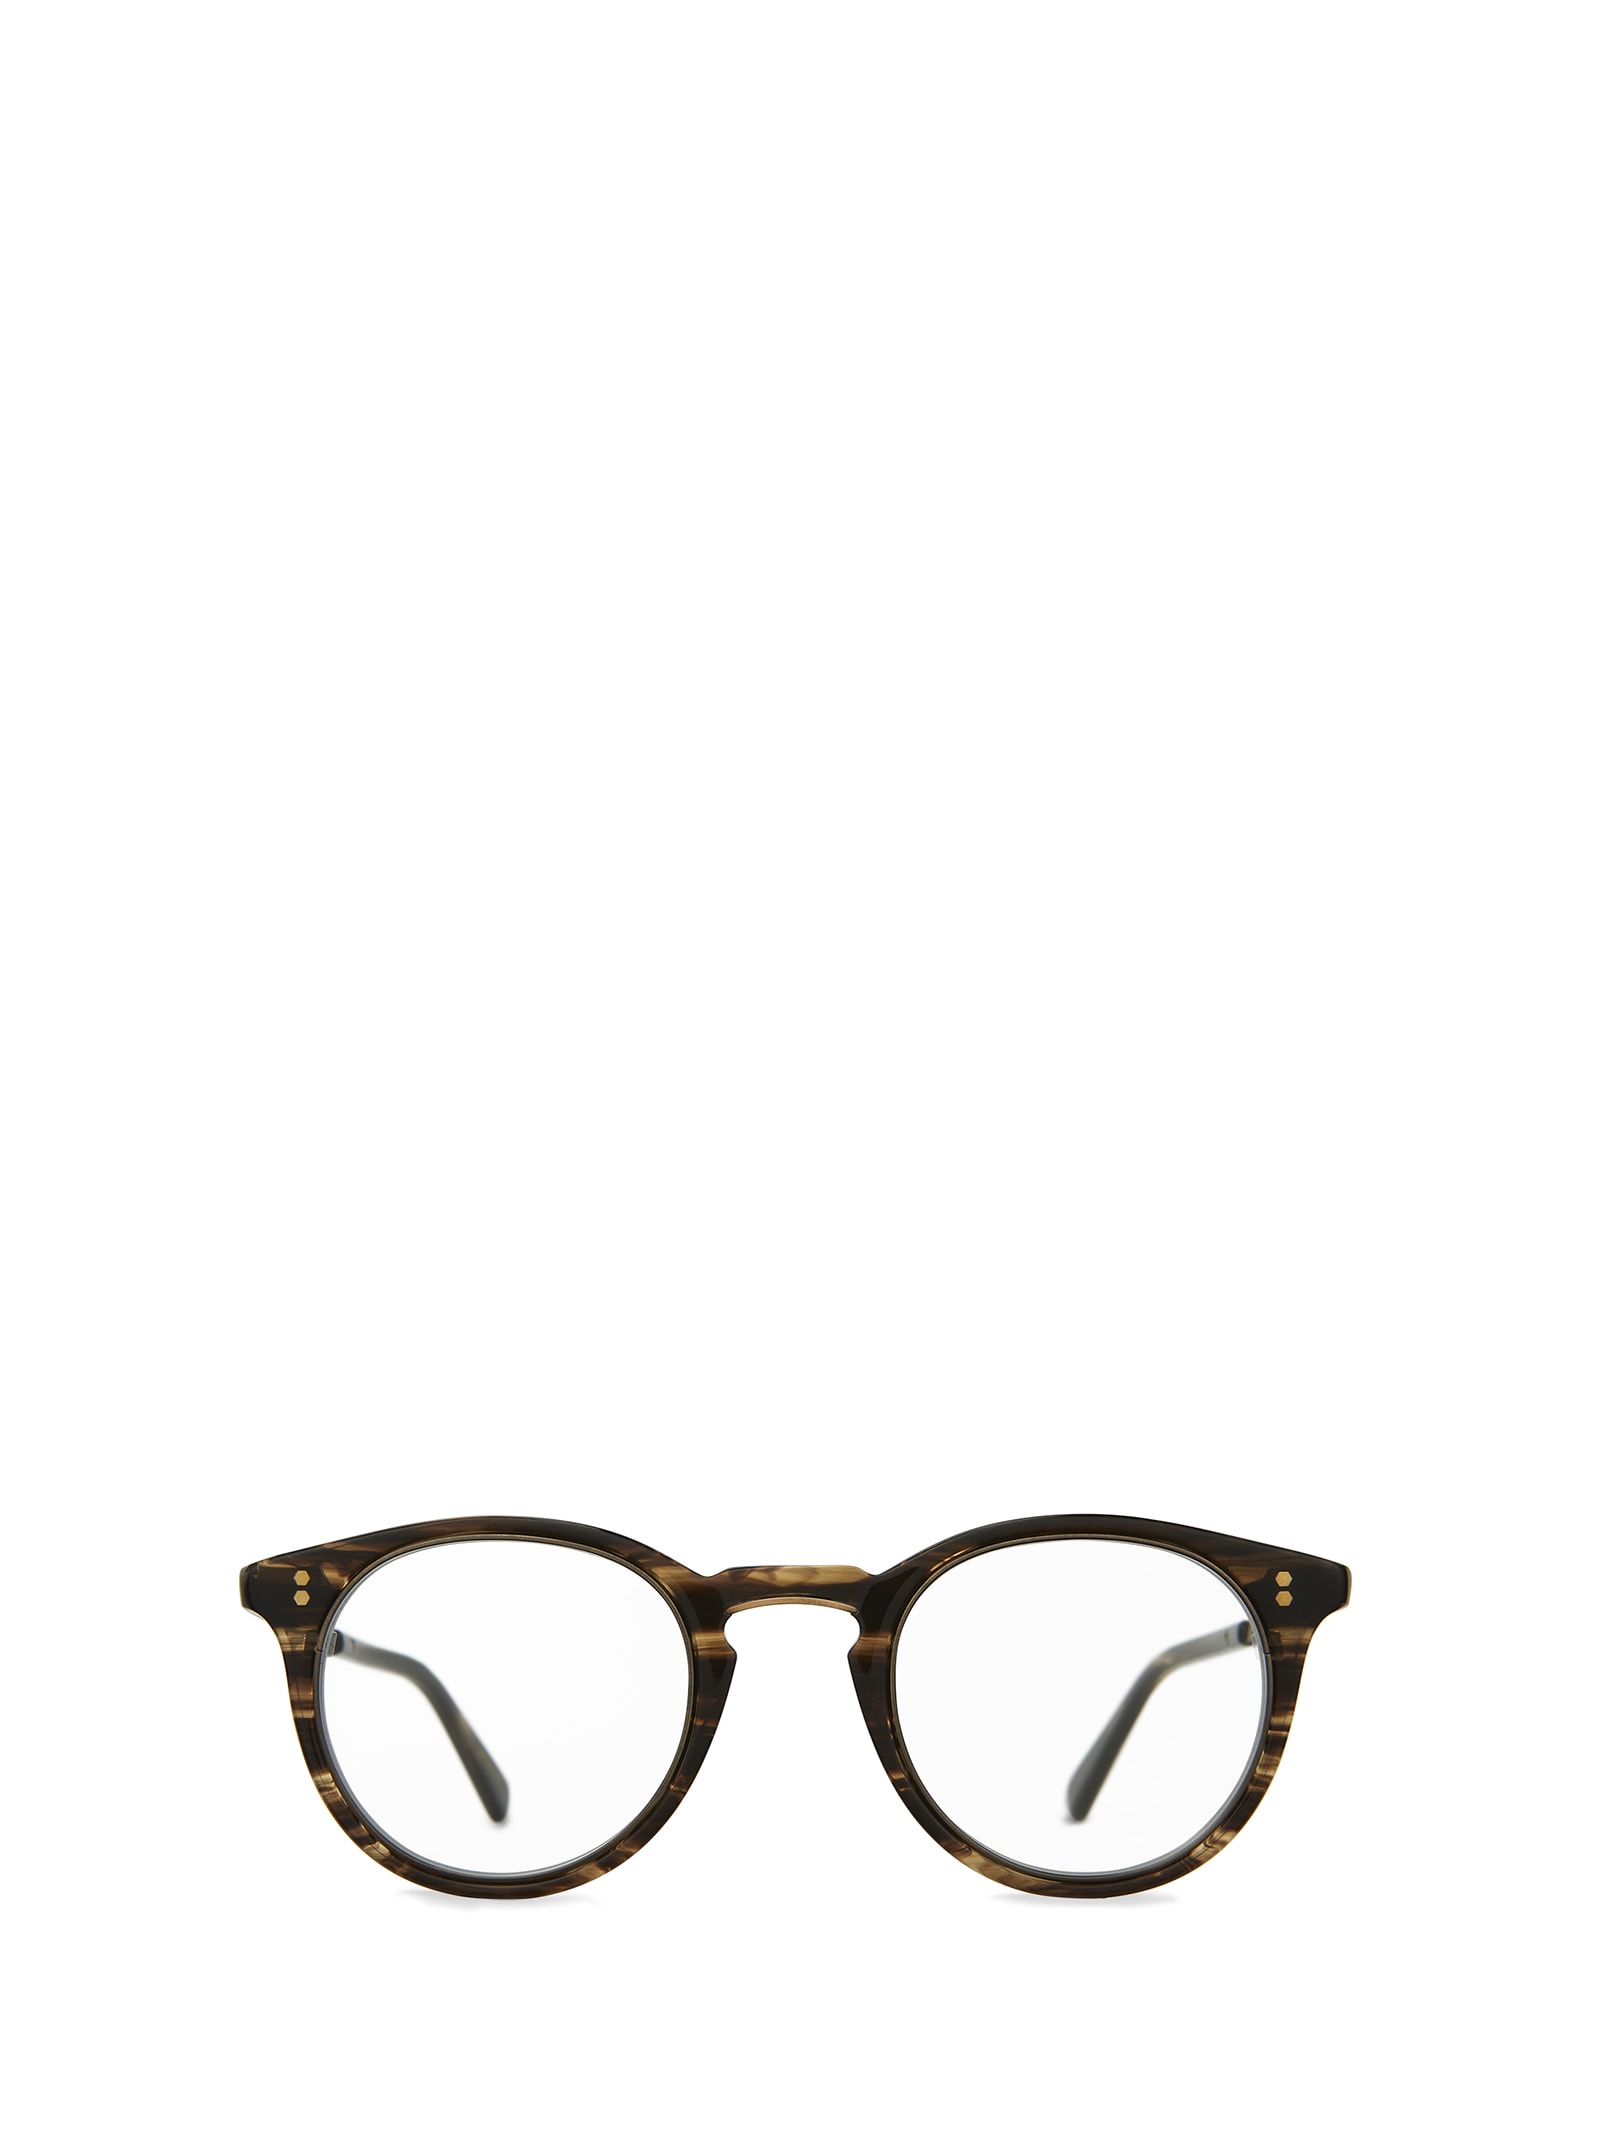 mr. leight crosby c porter tortoise - antique gold glasses